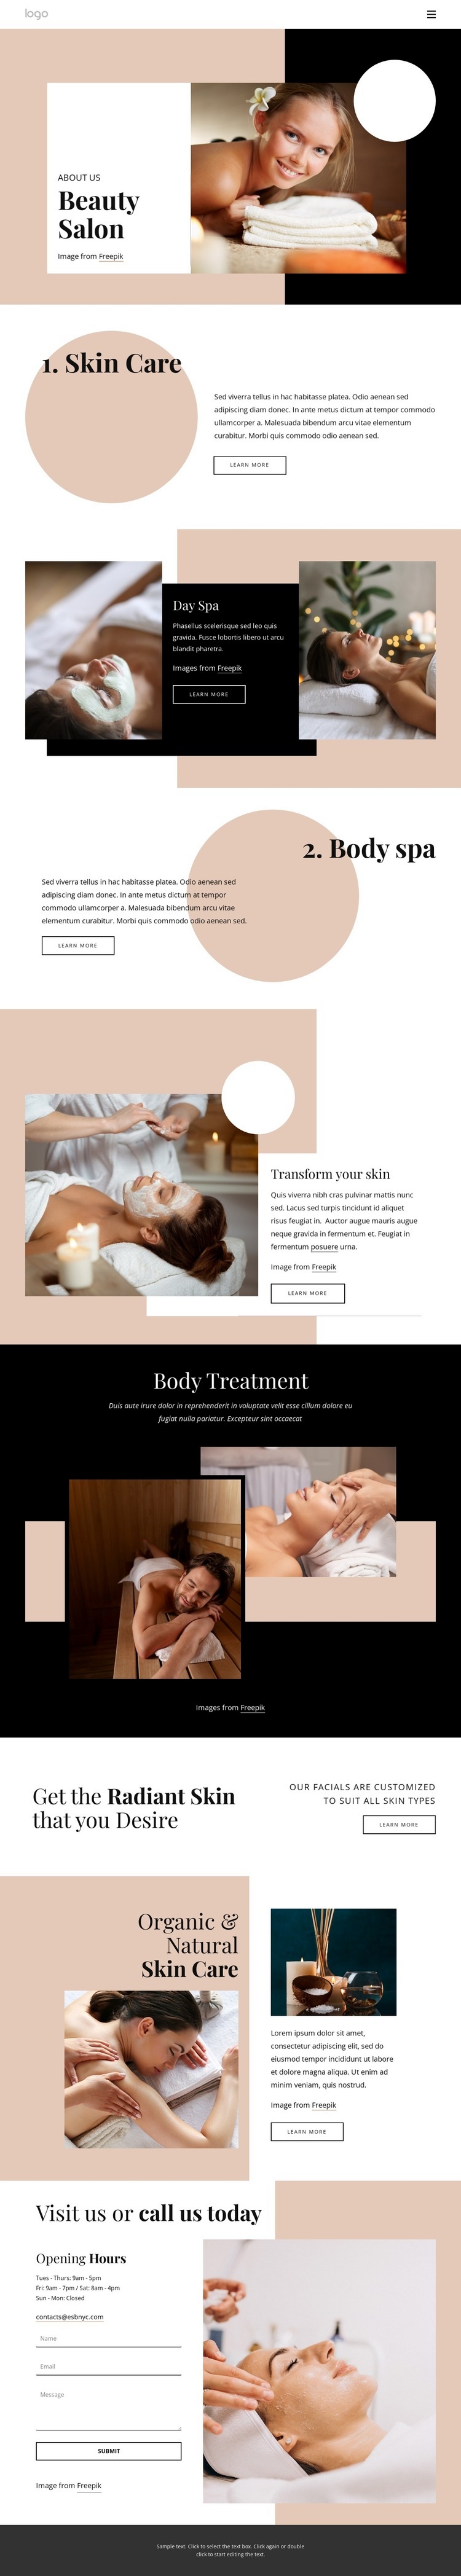 New wellness experiences Homepage Design